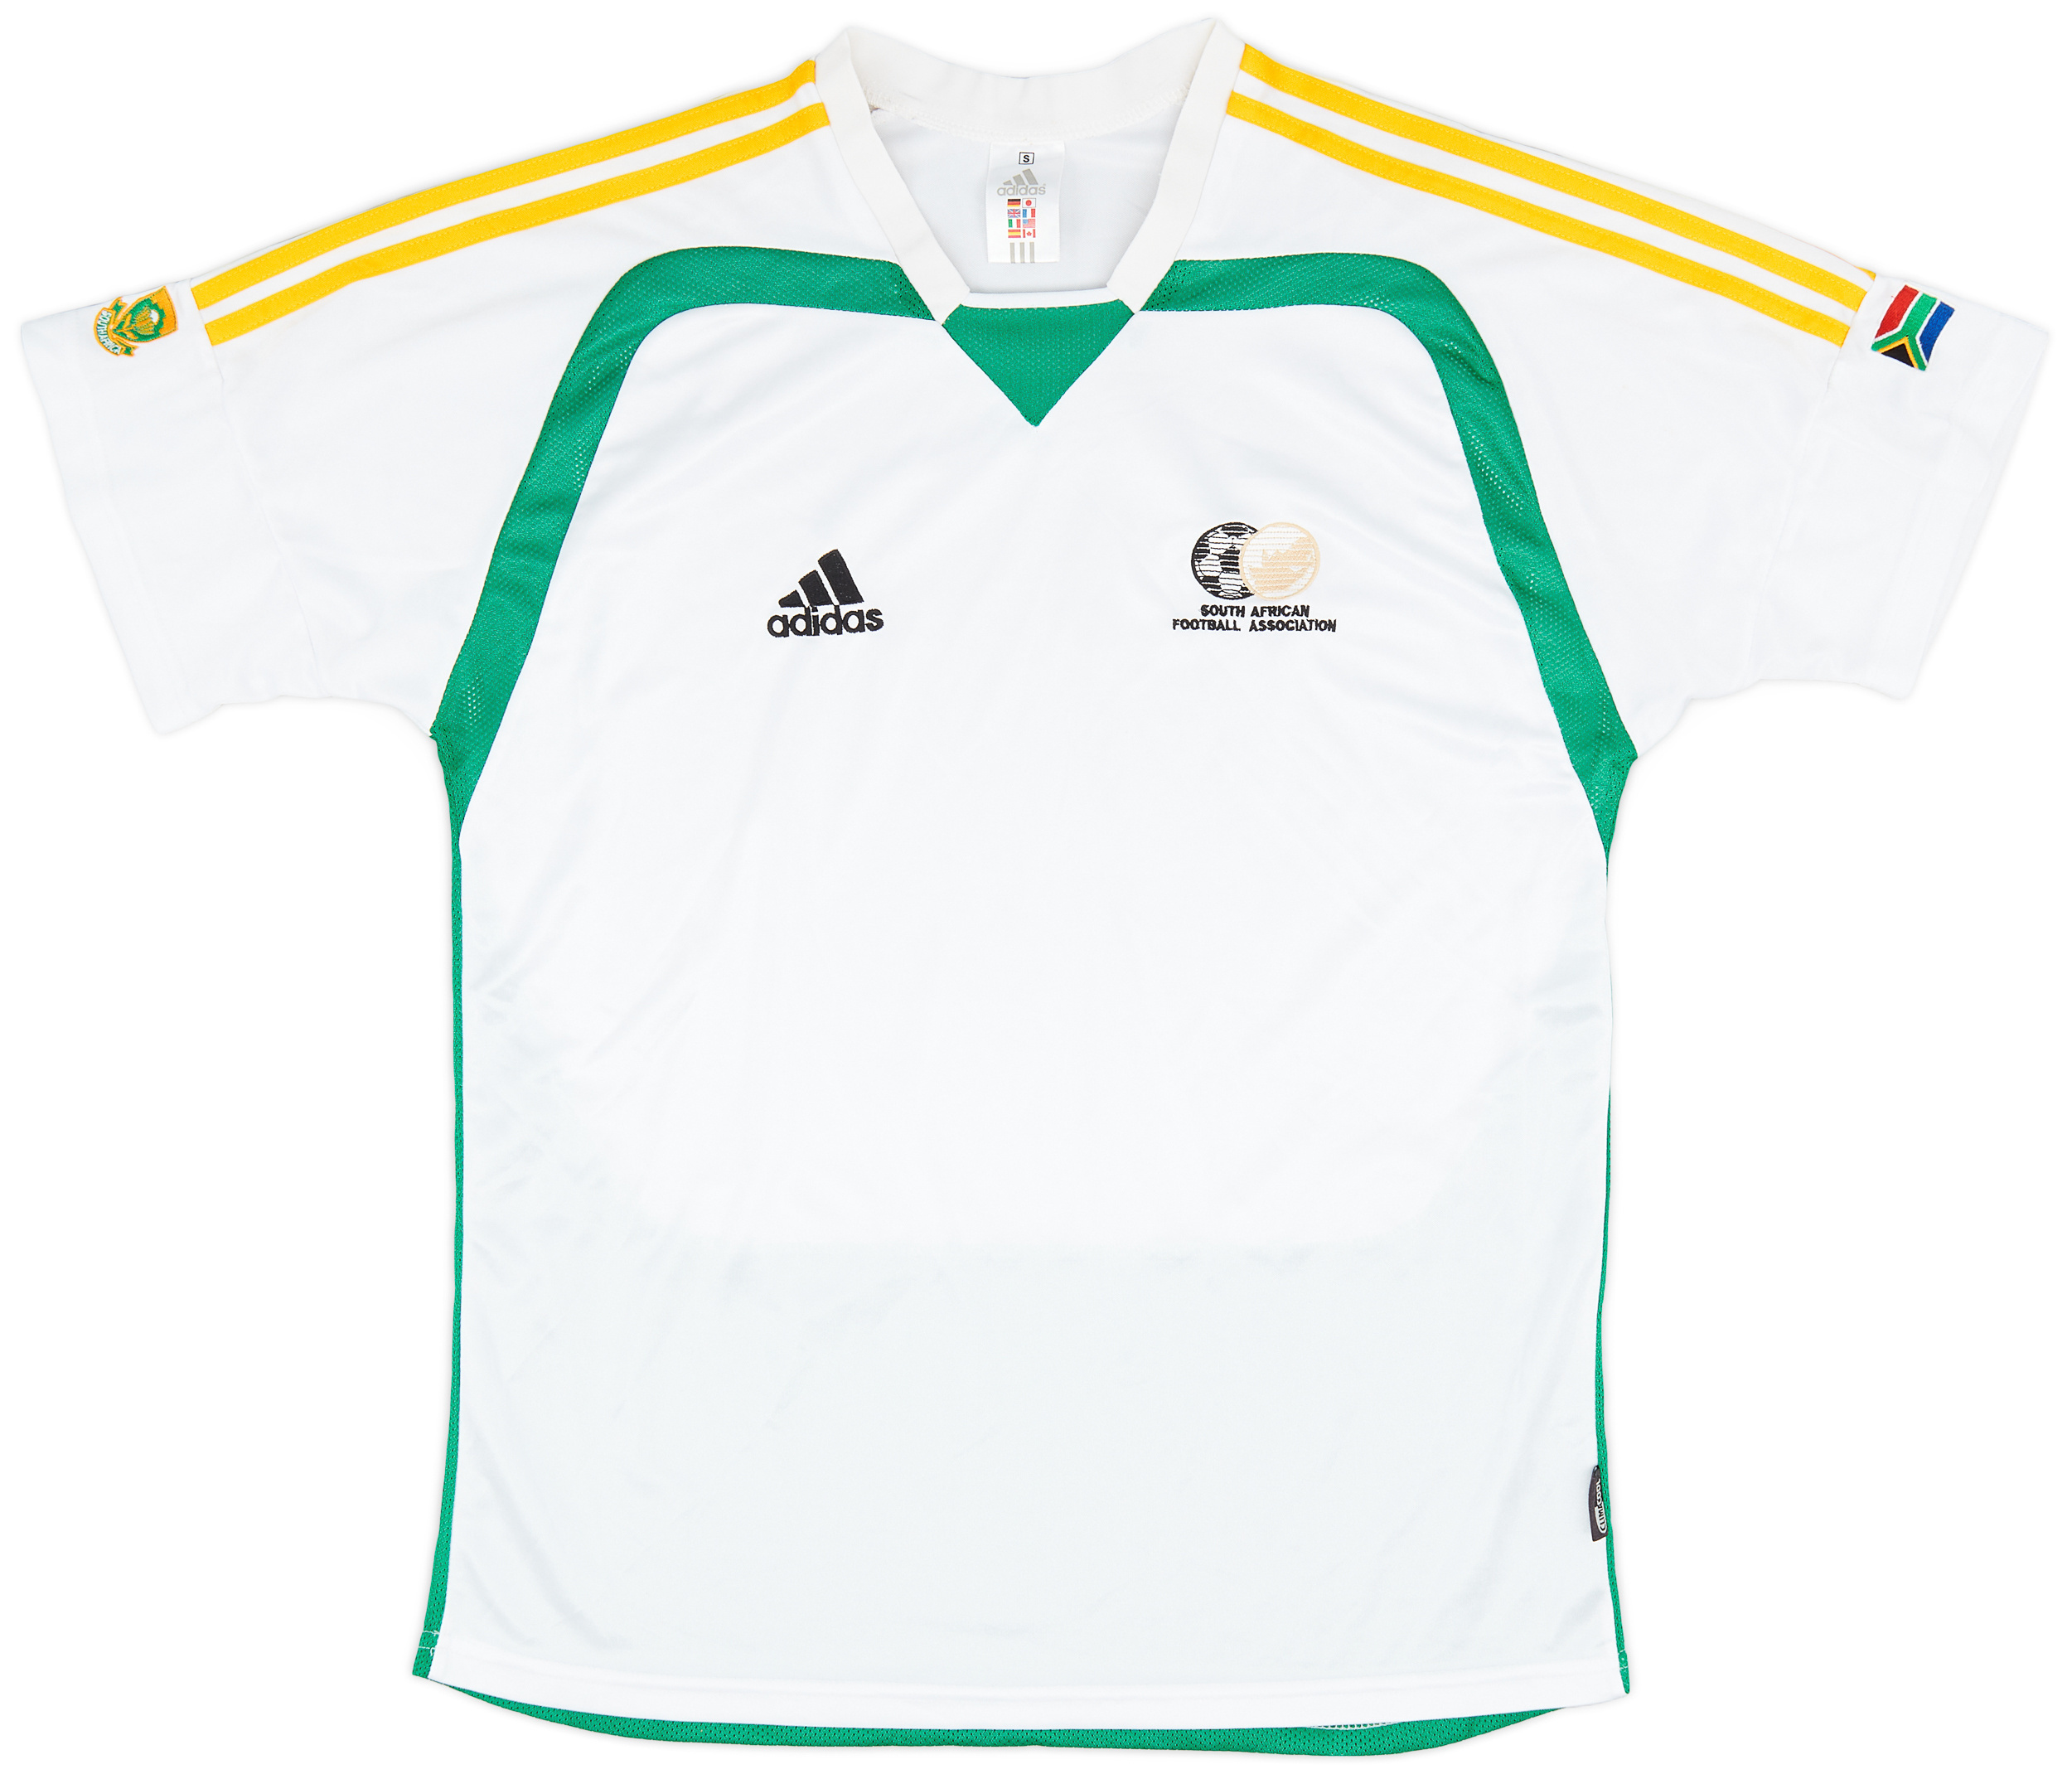 2004-06 South Africa Away Shirt - 8/10 - ()